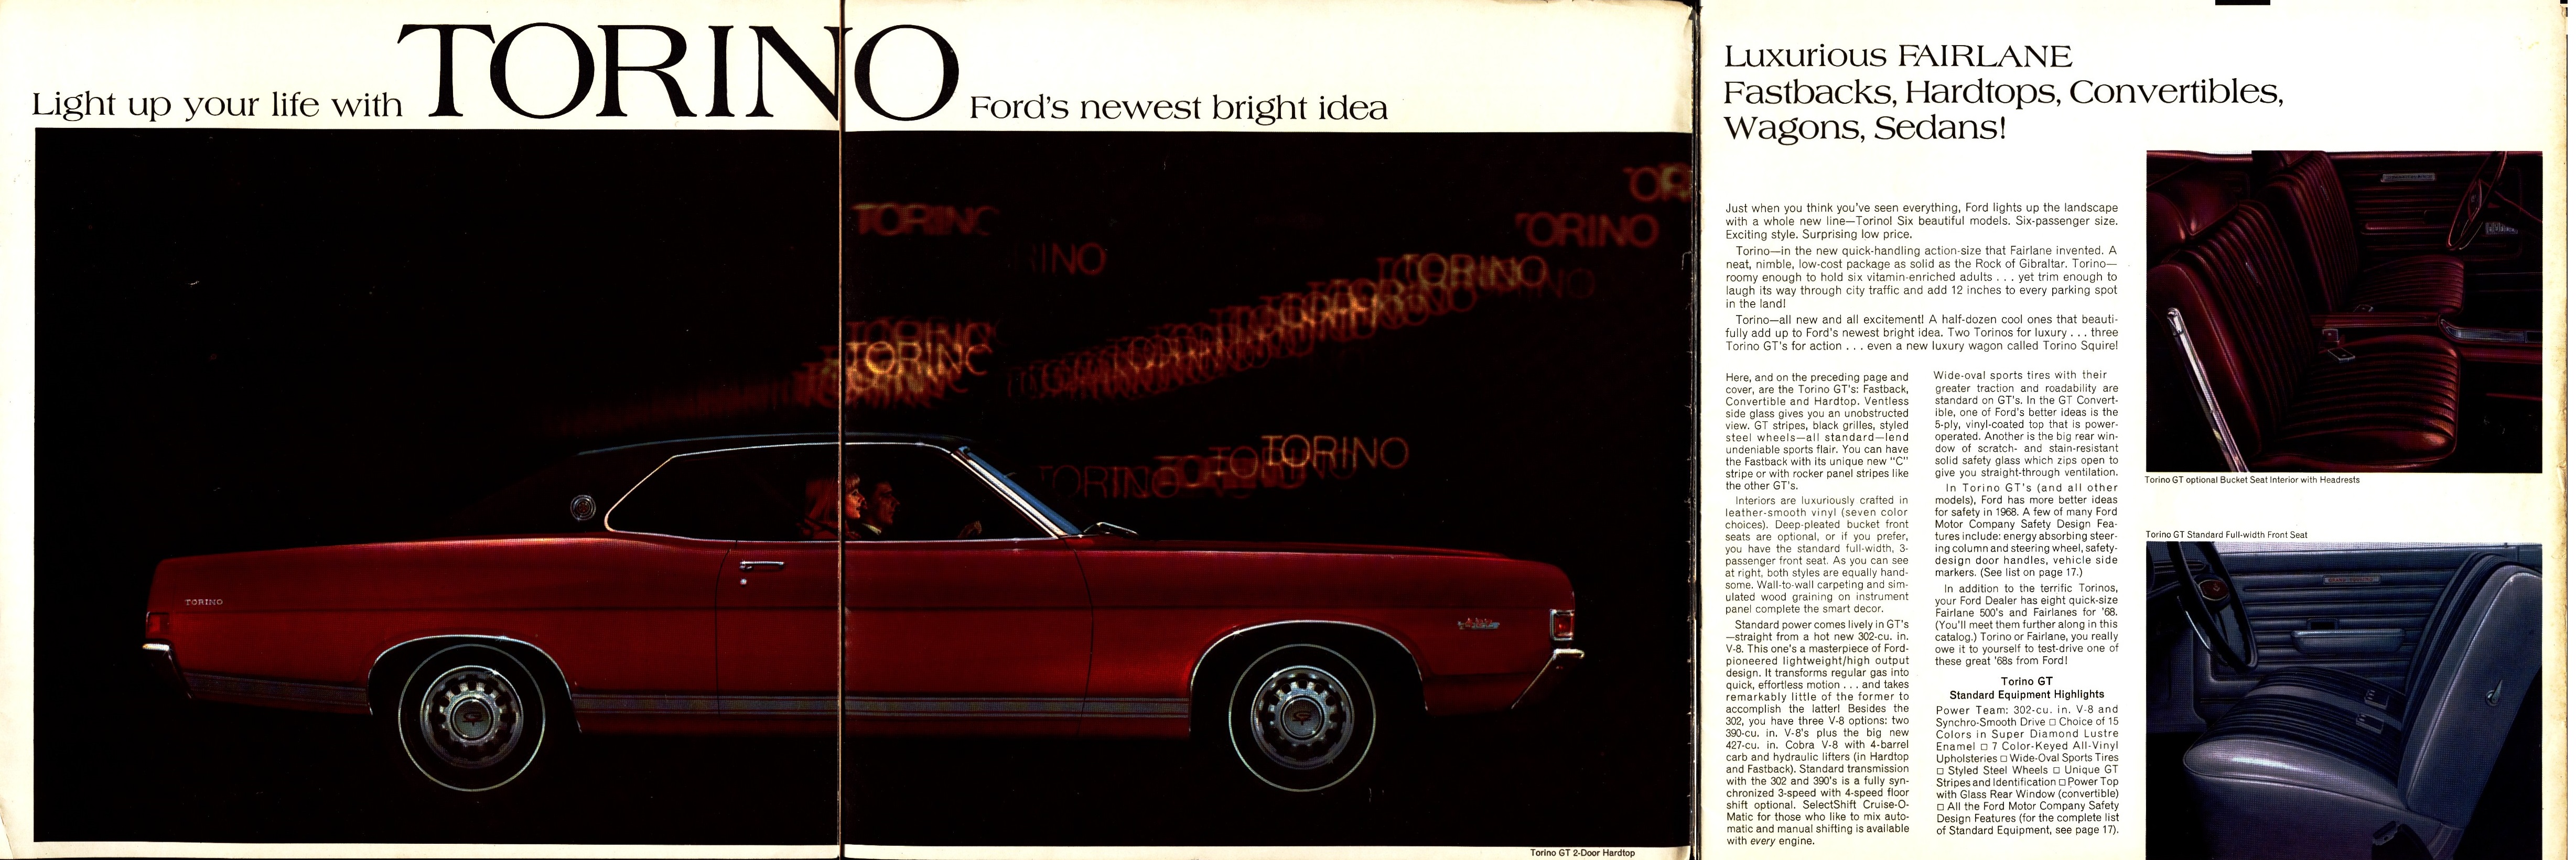 1968 Ford Torino and Fairlane Brochure Canada 03-04-05